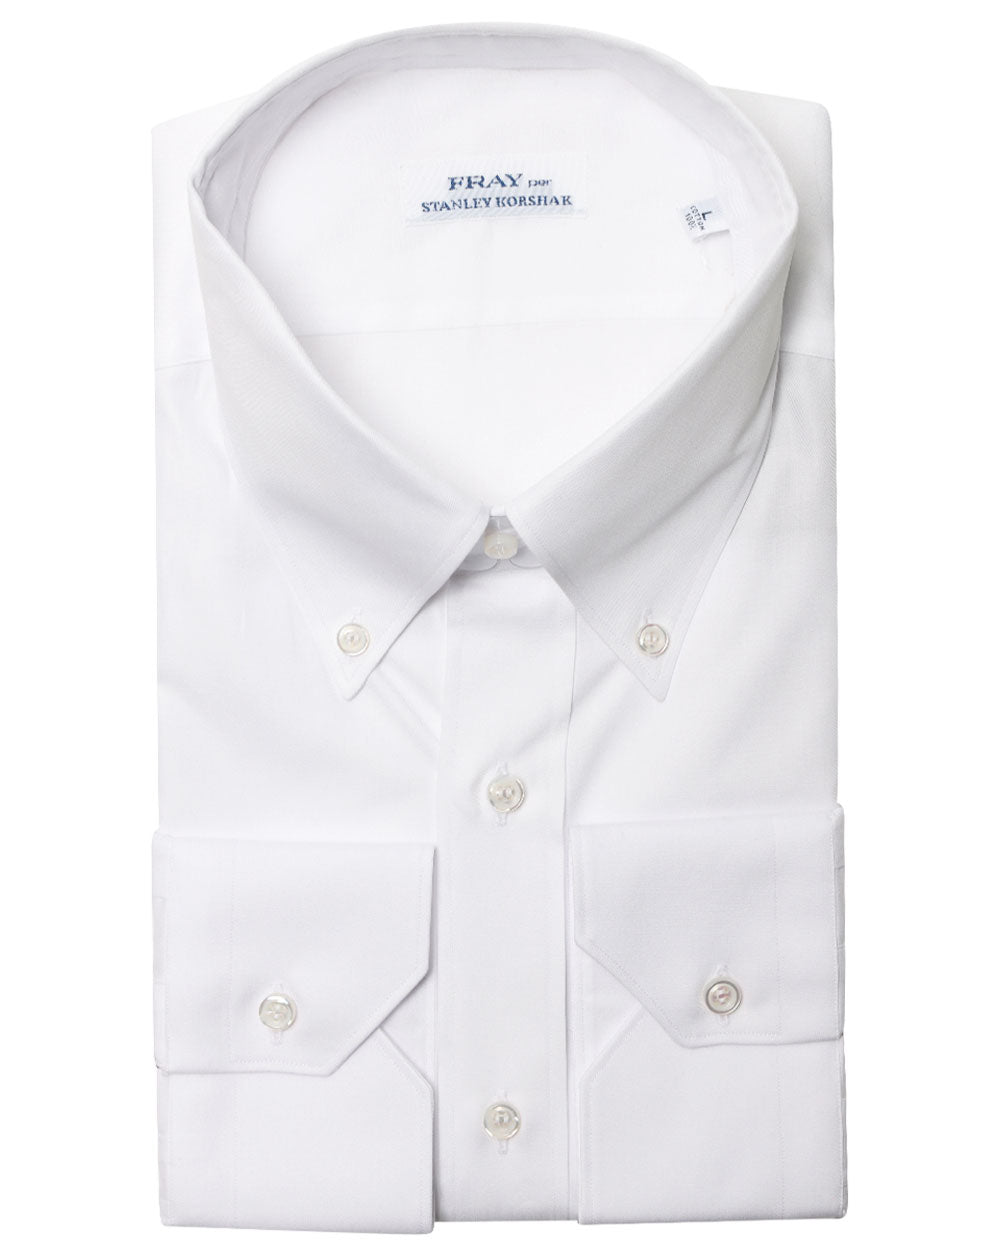 Zara White Cotton Dress Shirt – Stanley Korshak